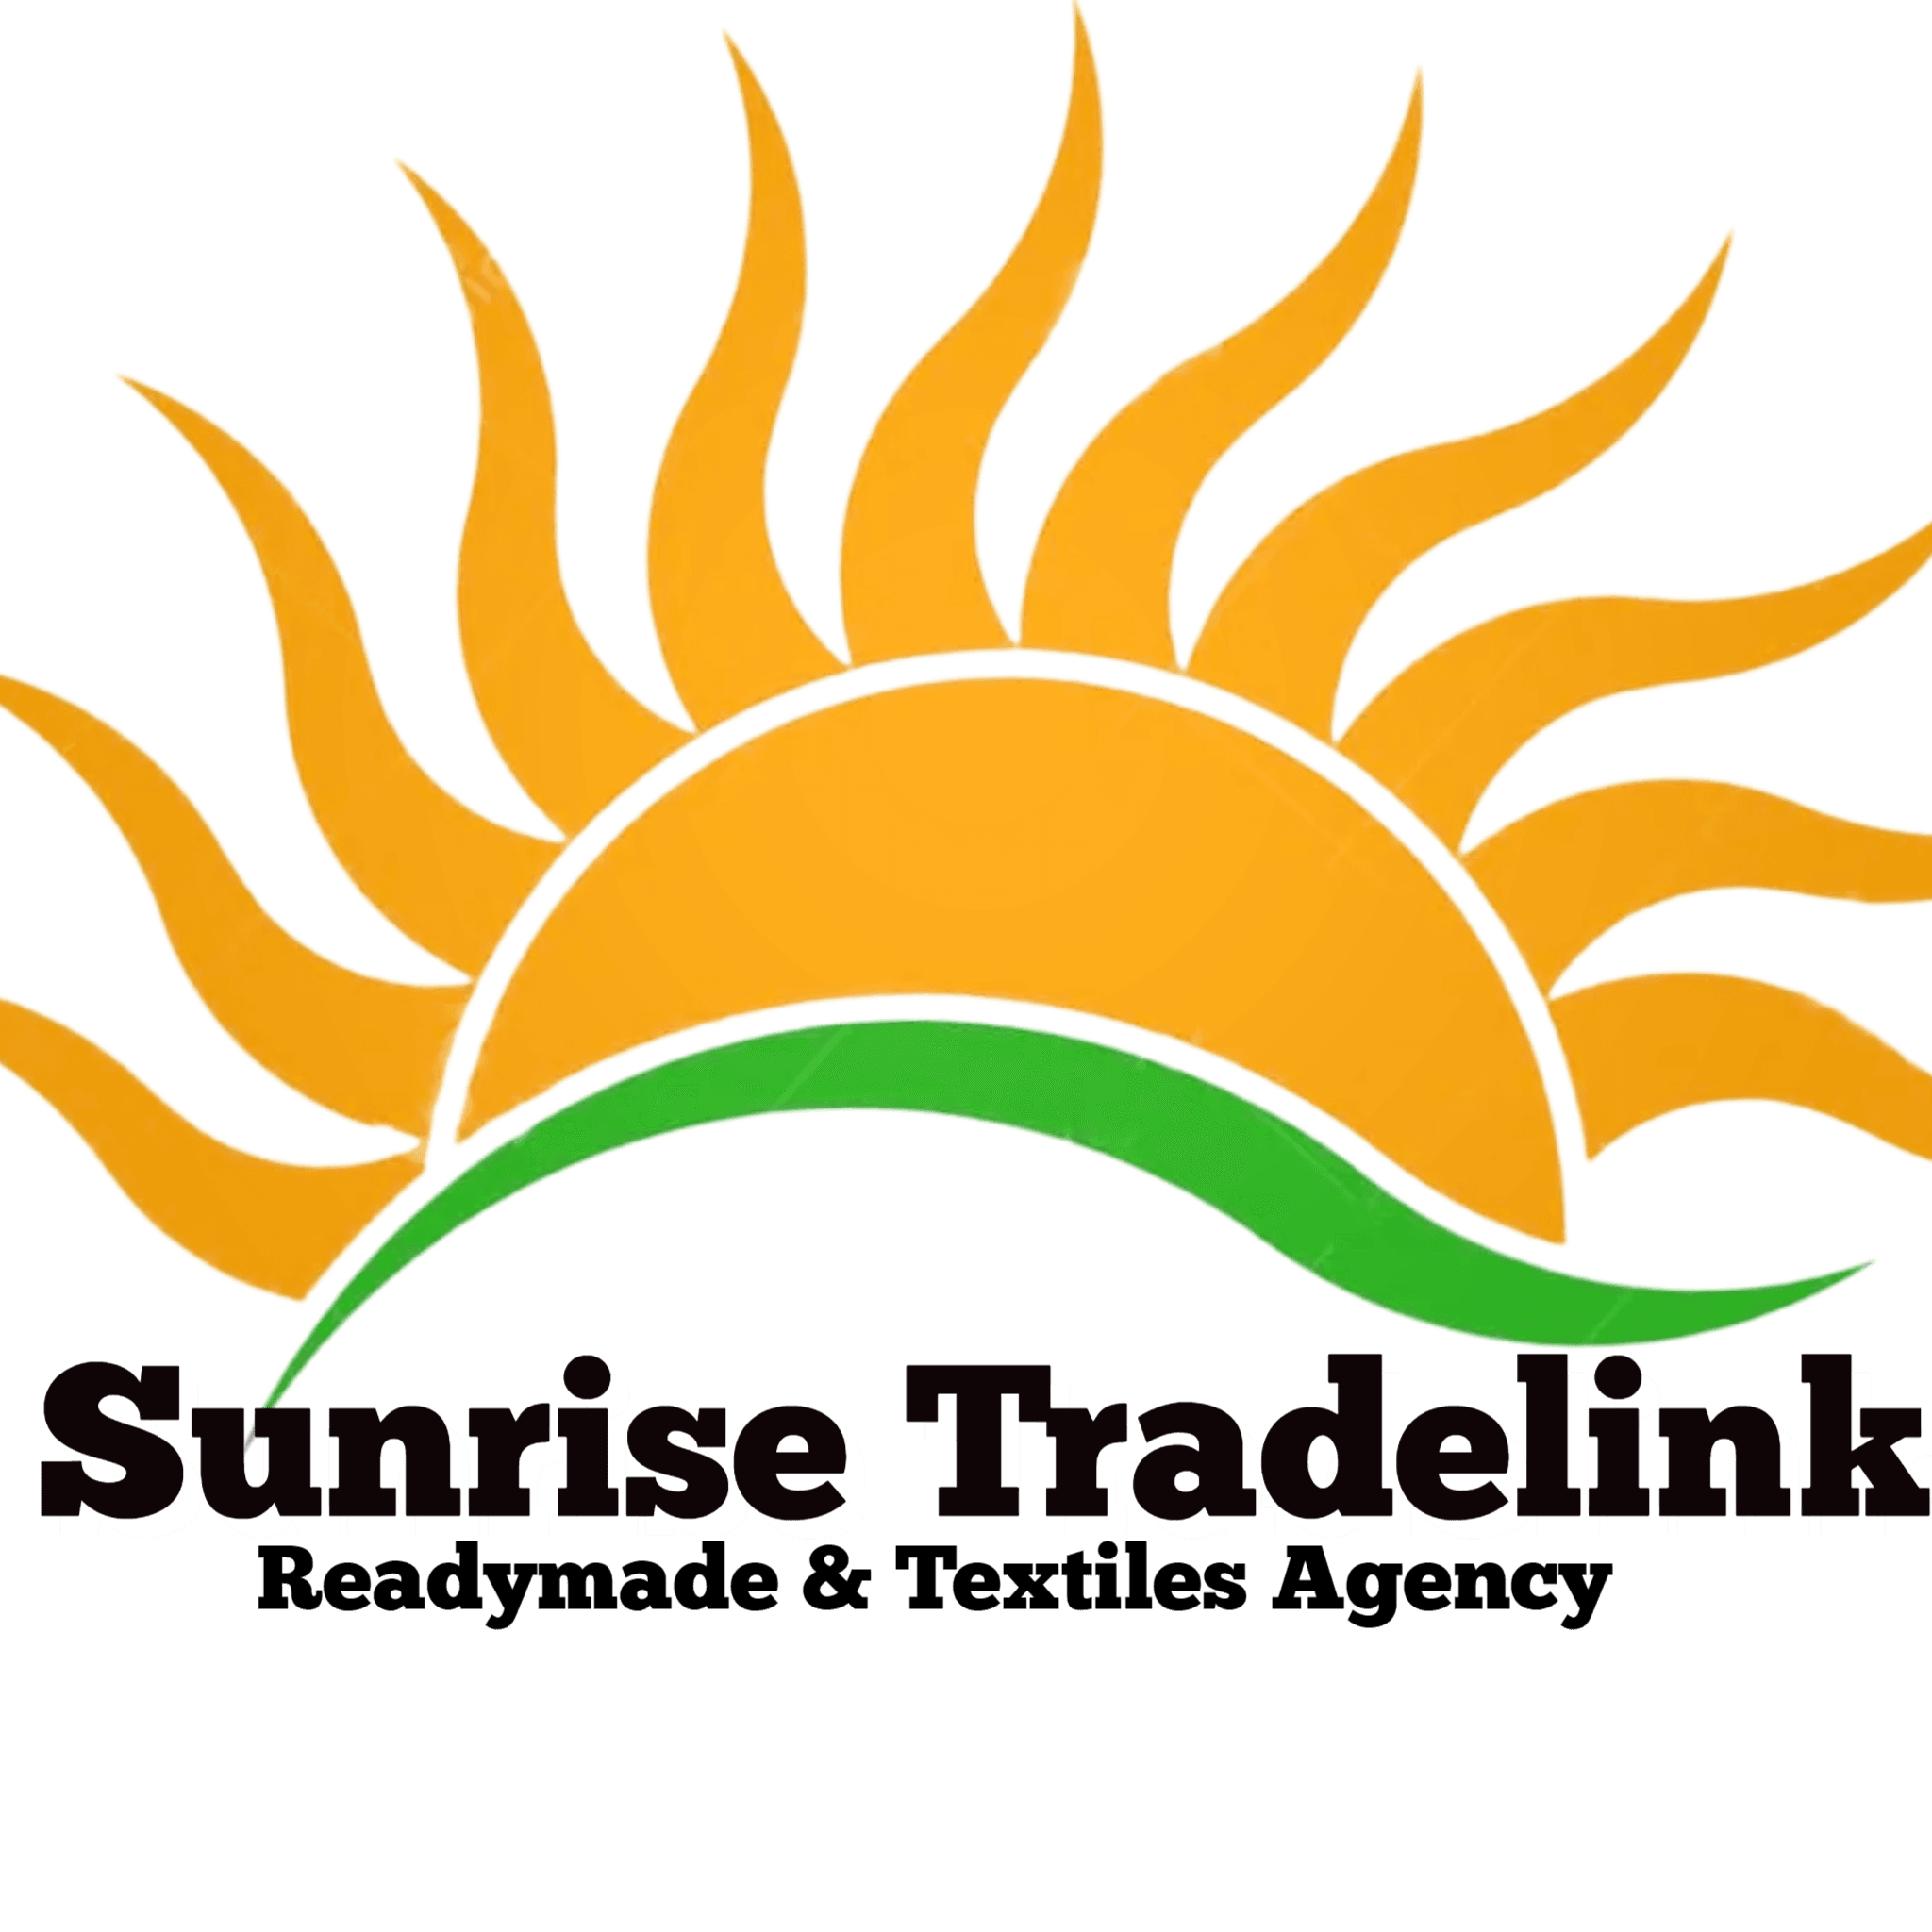 Sunrise Trade Link